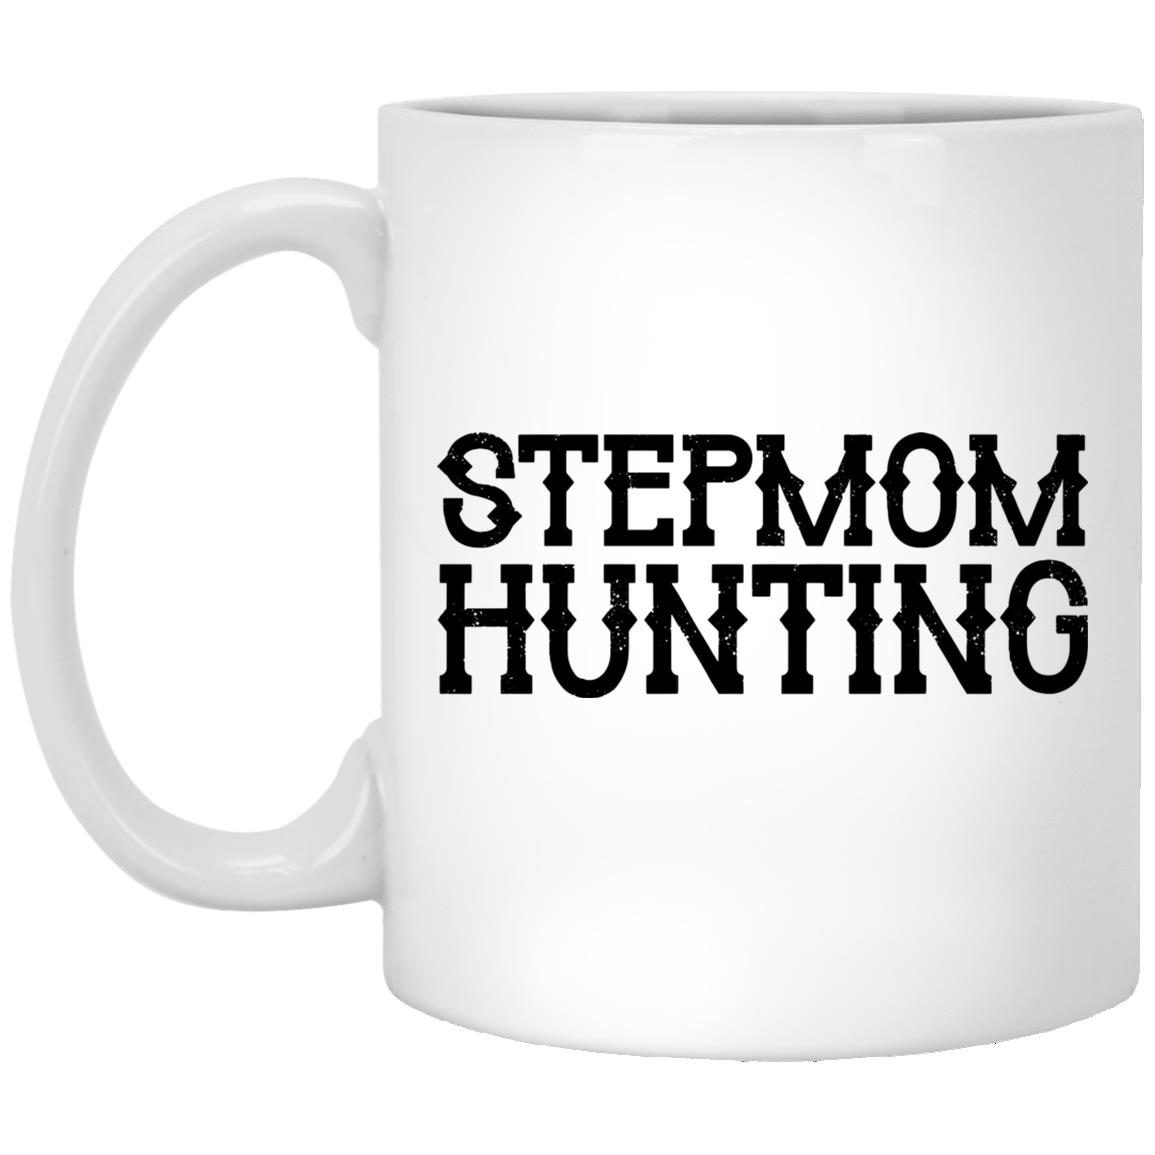 Stepmom Hunting Shirt Funny Quote shirt